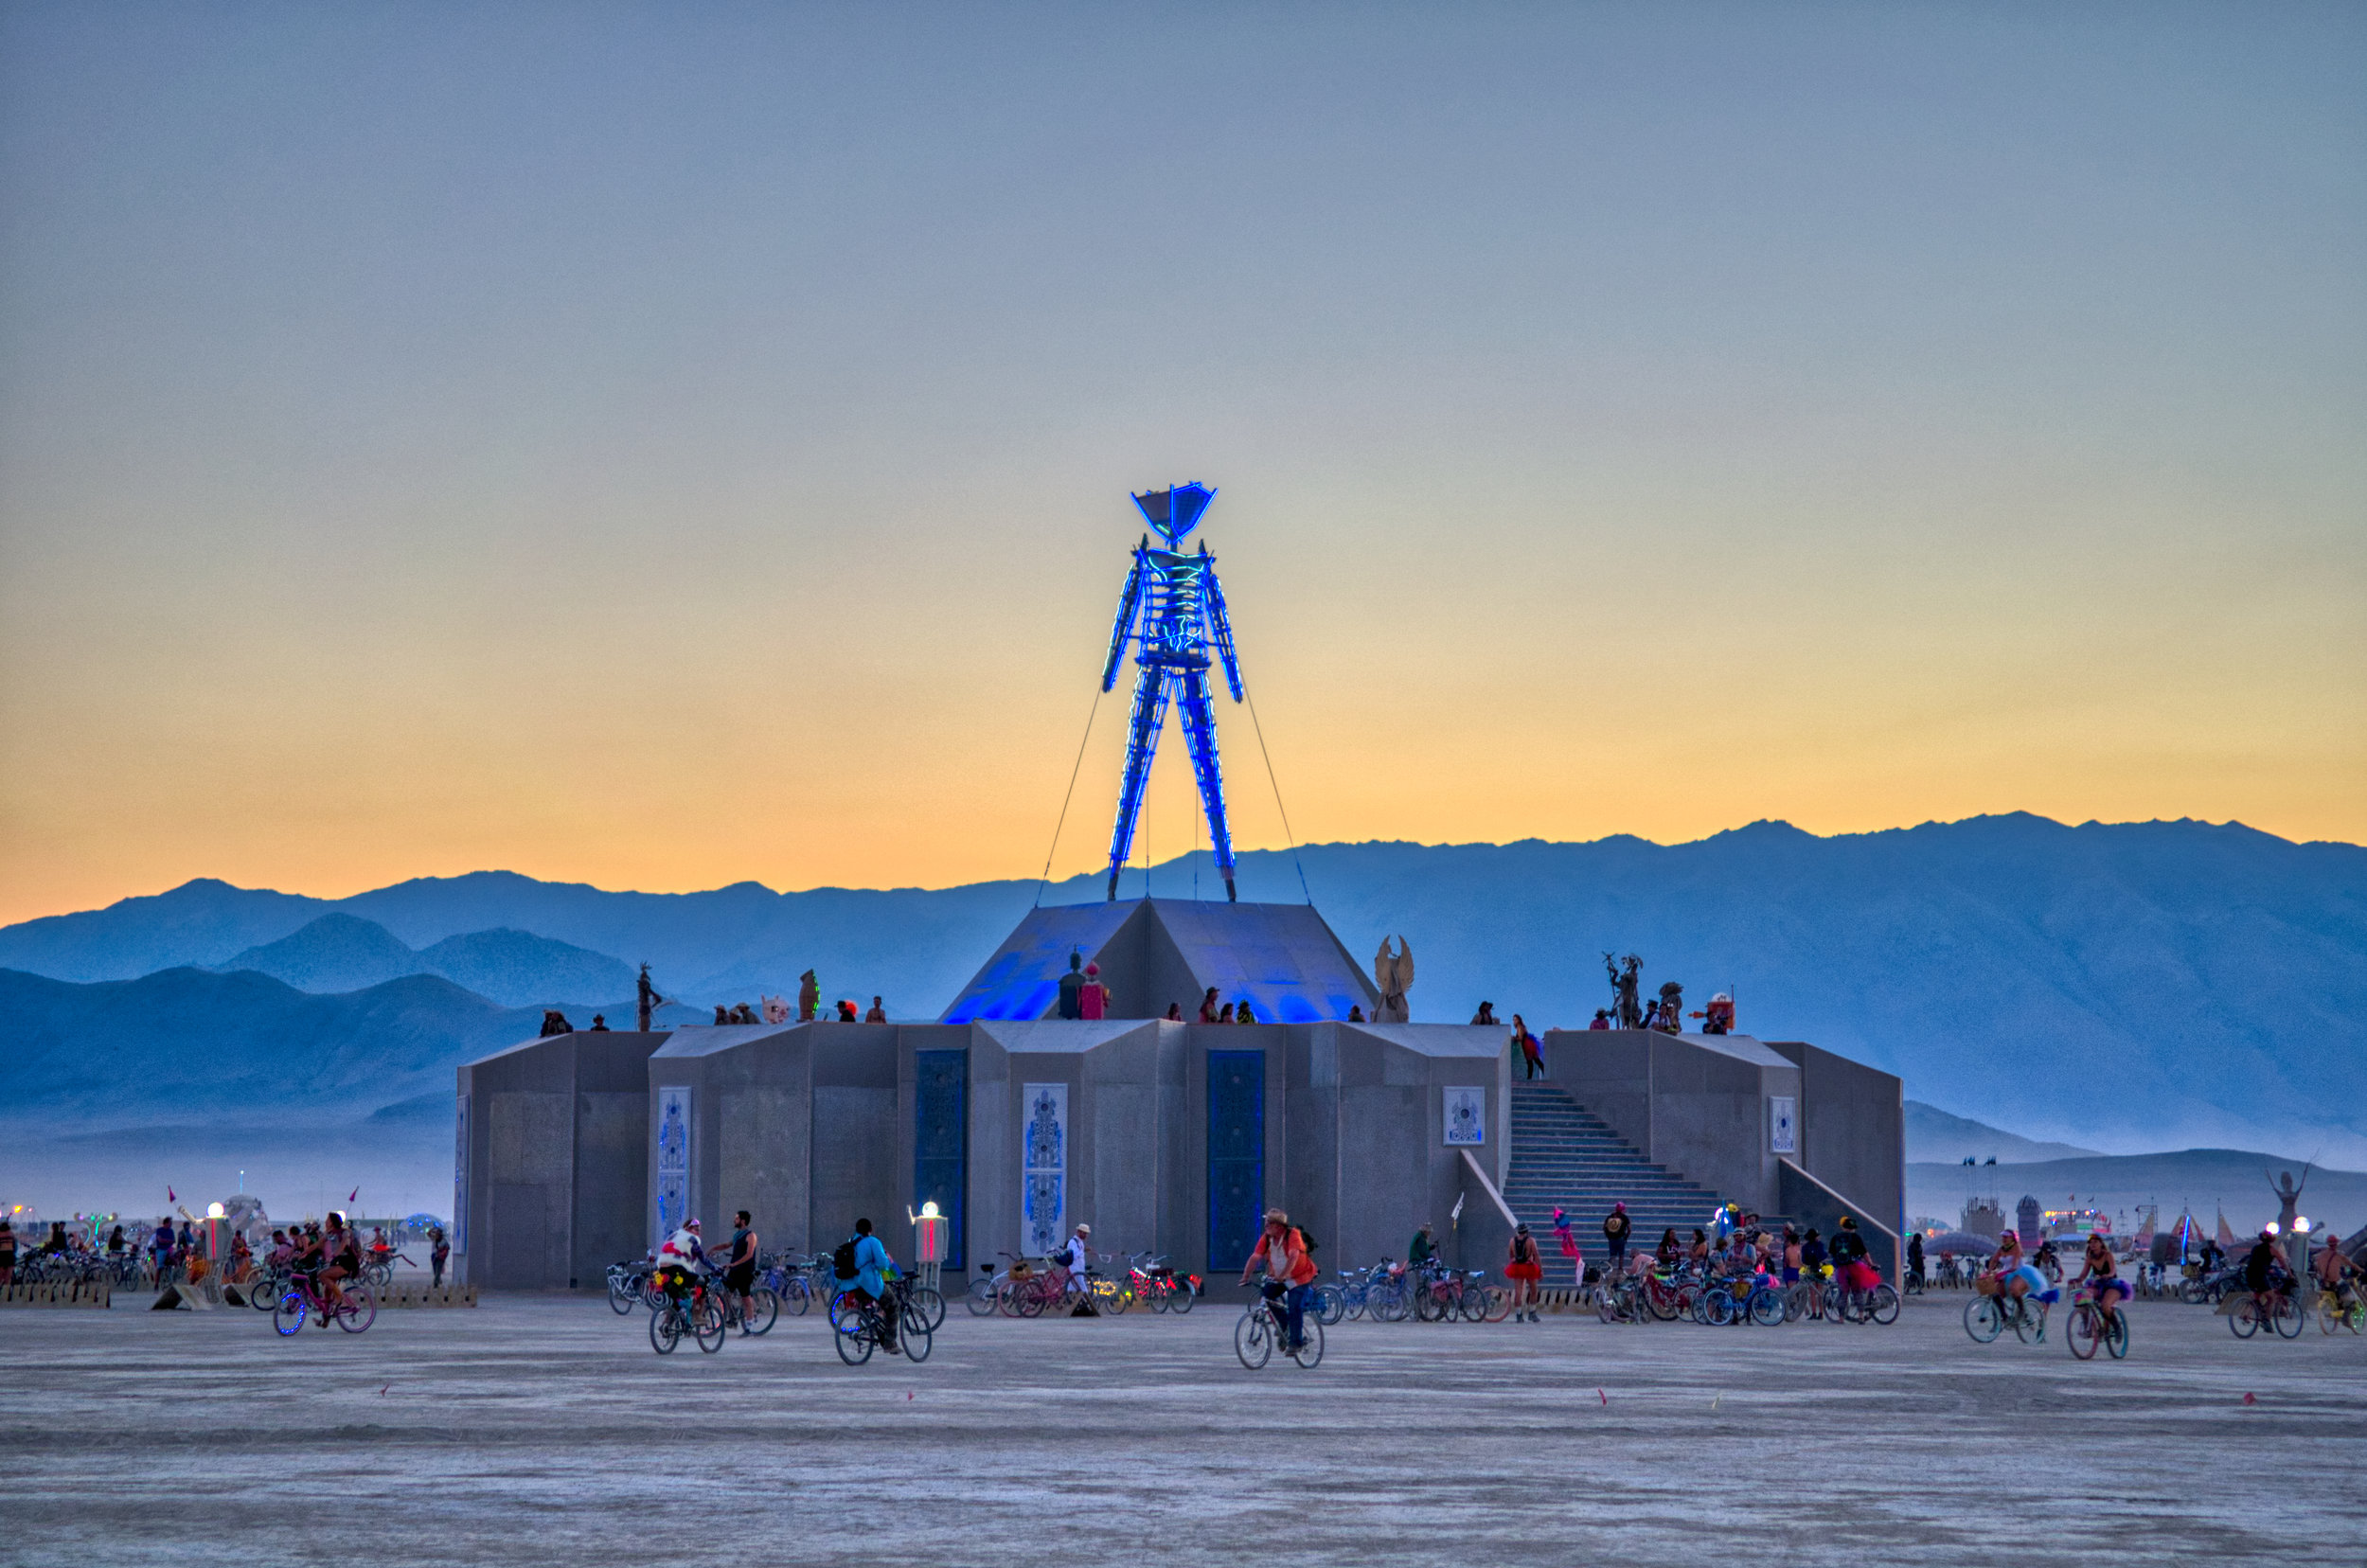 Burning Man 2018 - The Man at Dusk